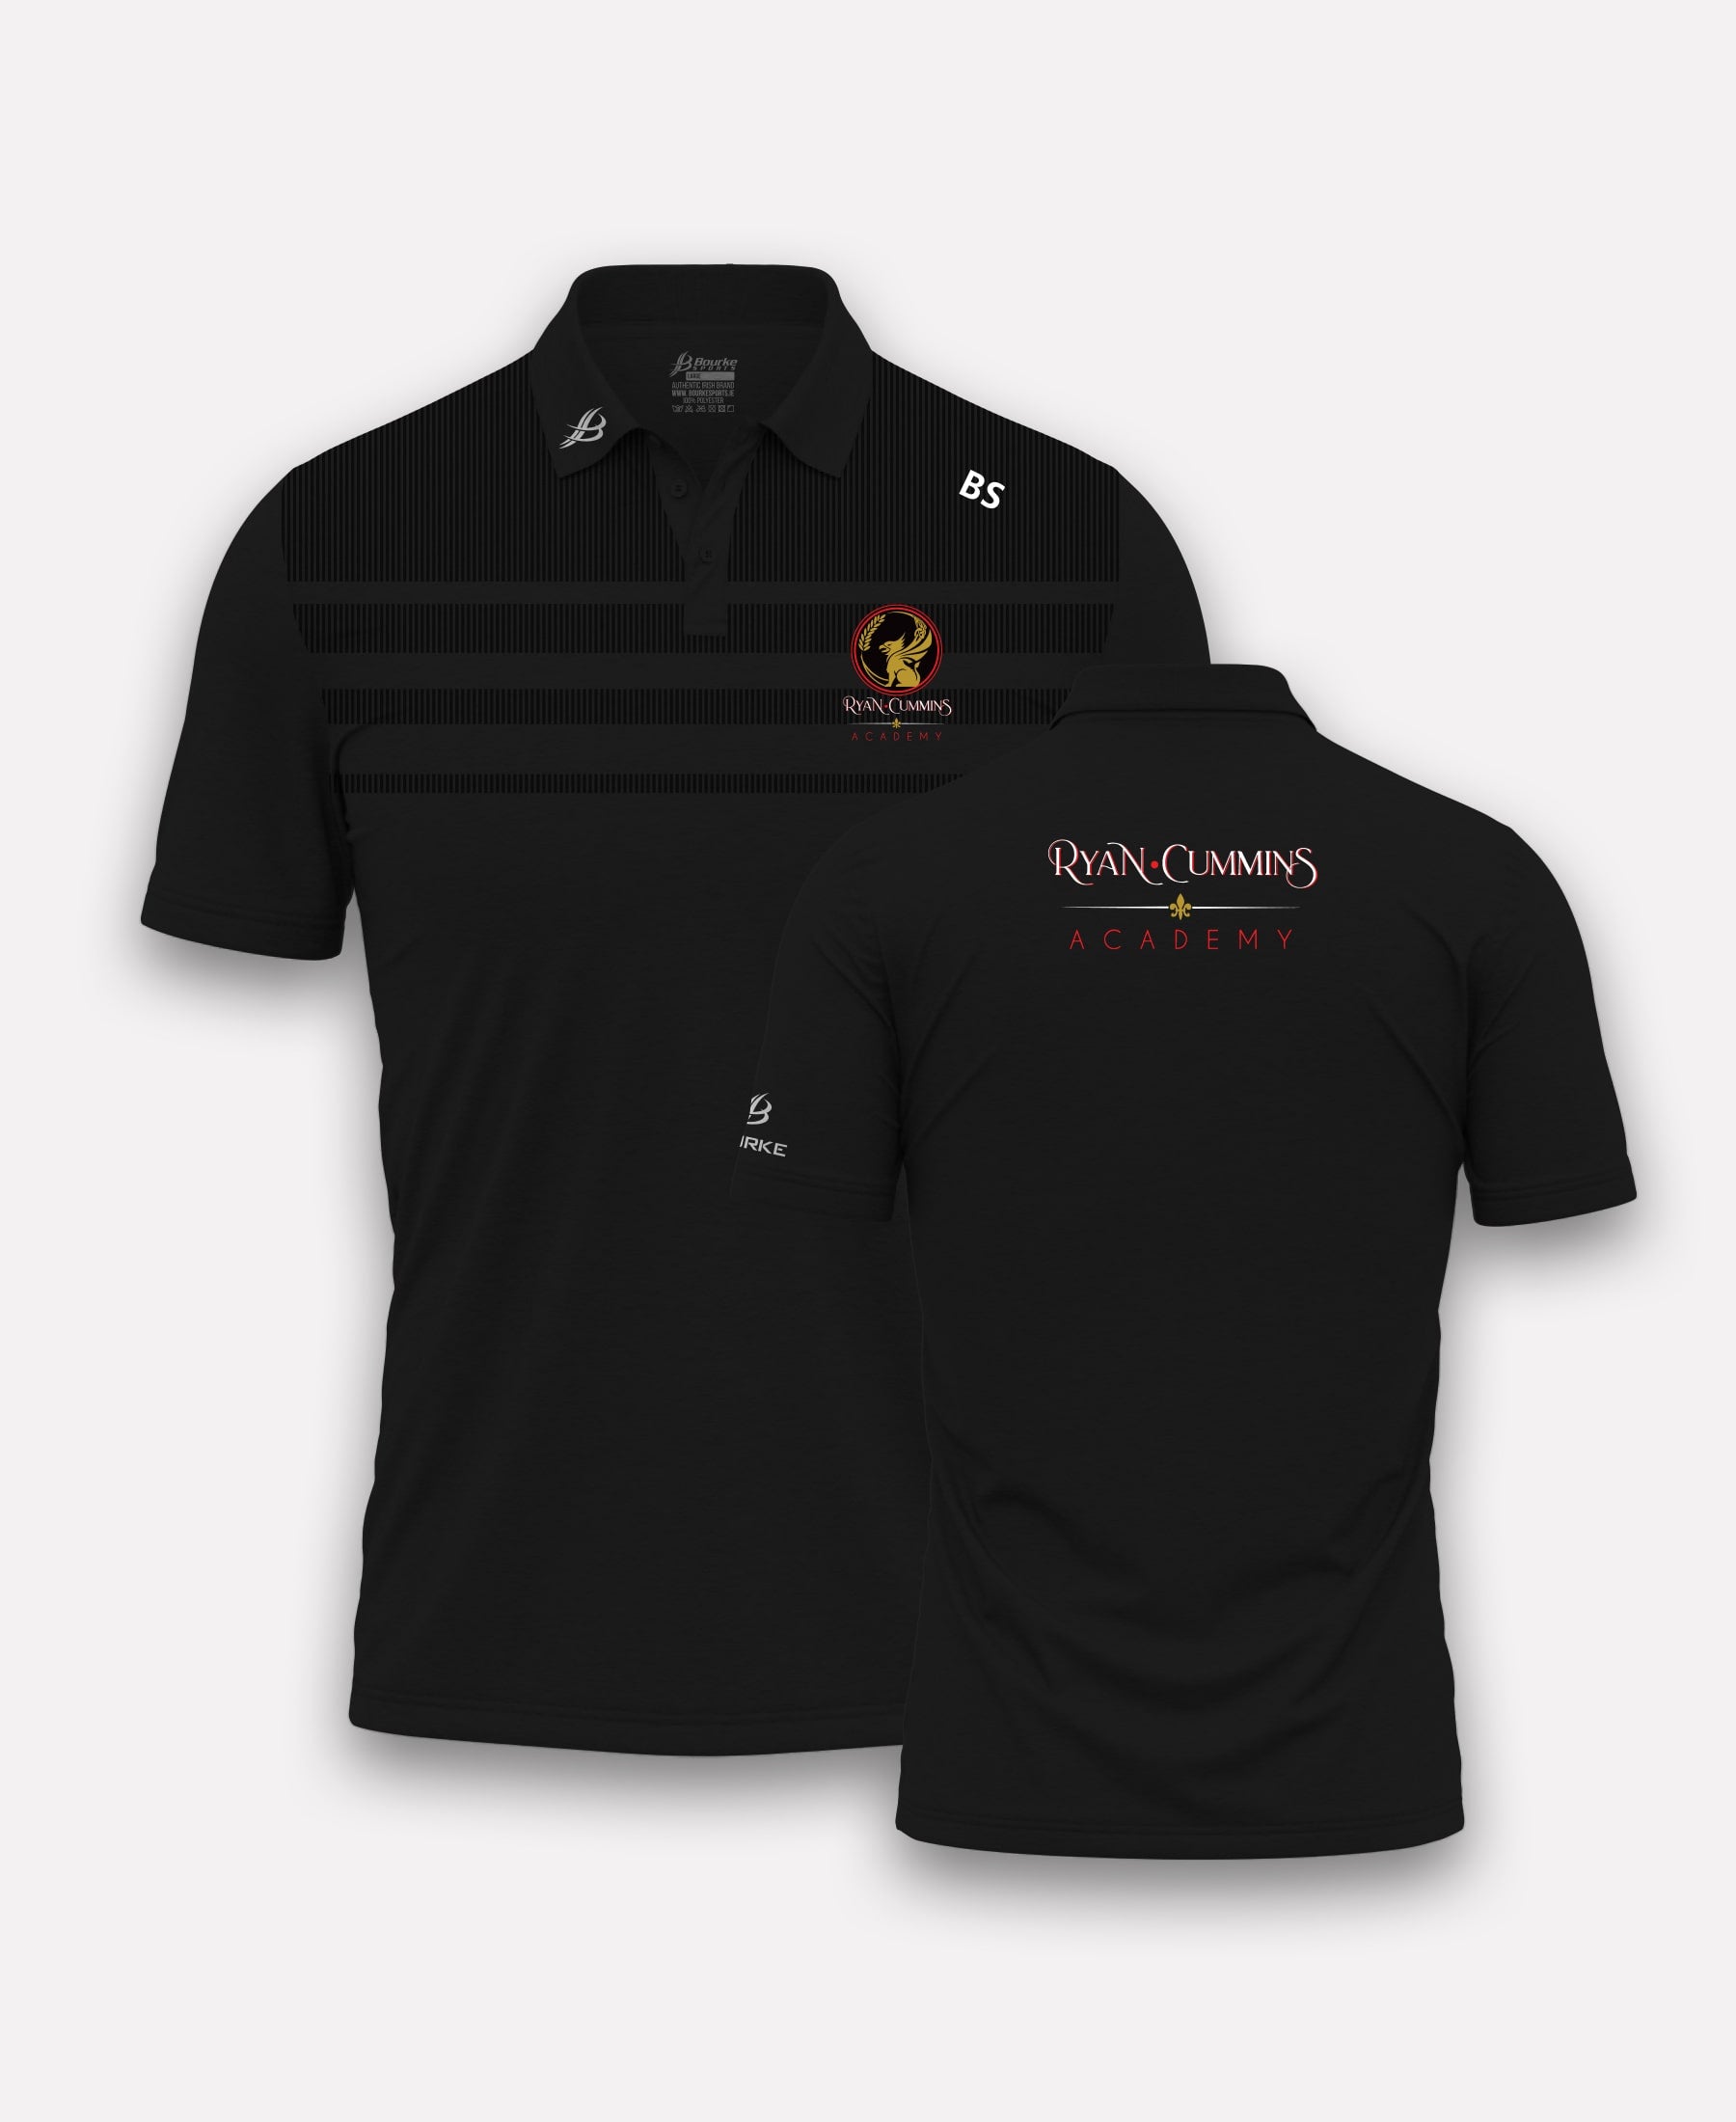 Ryan-Cummins Academy TACA Polo Shirt Black